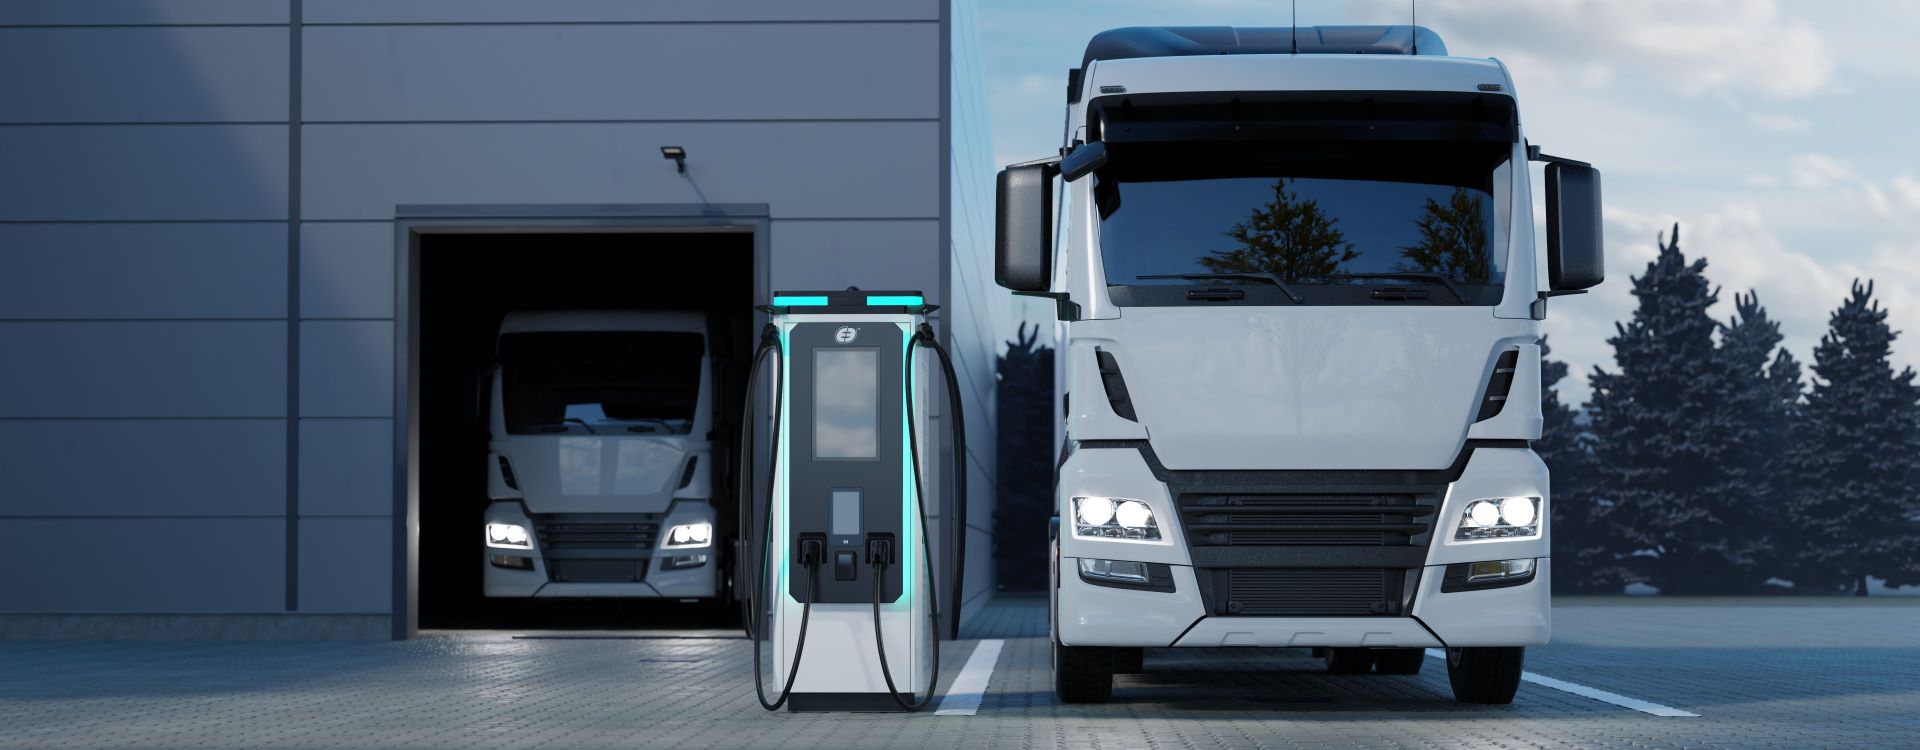 Charging stations for E-TRUCK - Ekoenergetyka